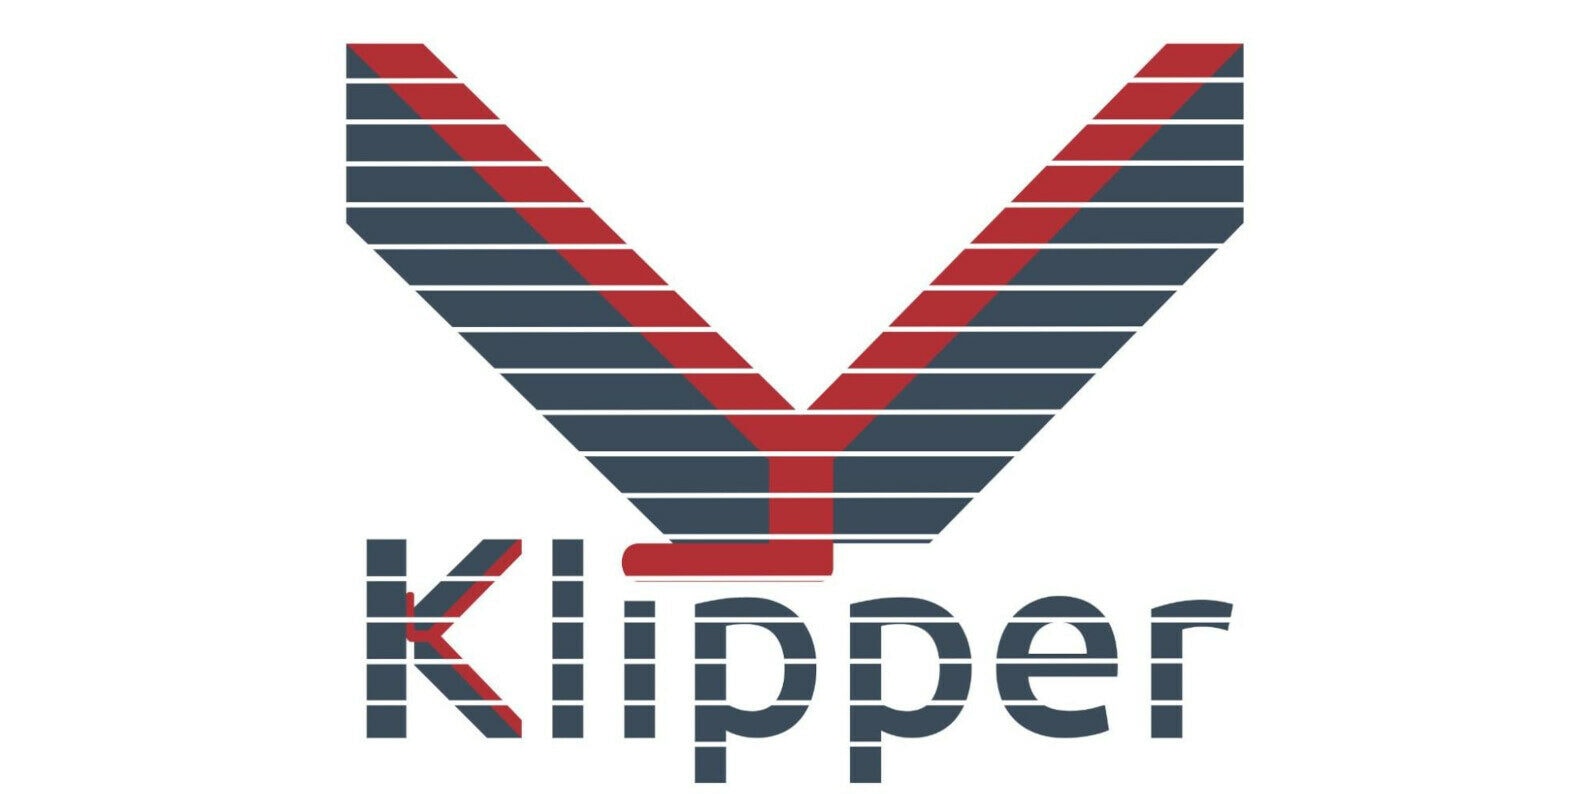 The Klipper logo with slicer effect.